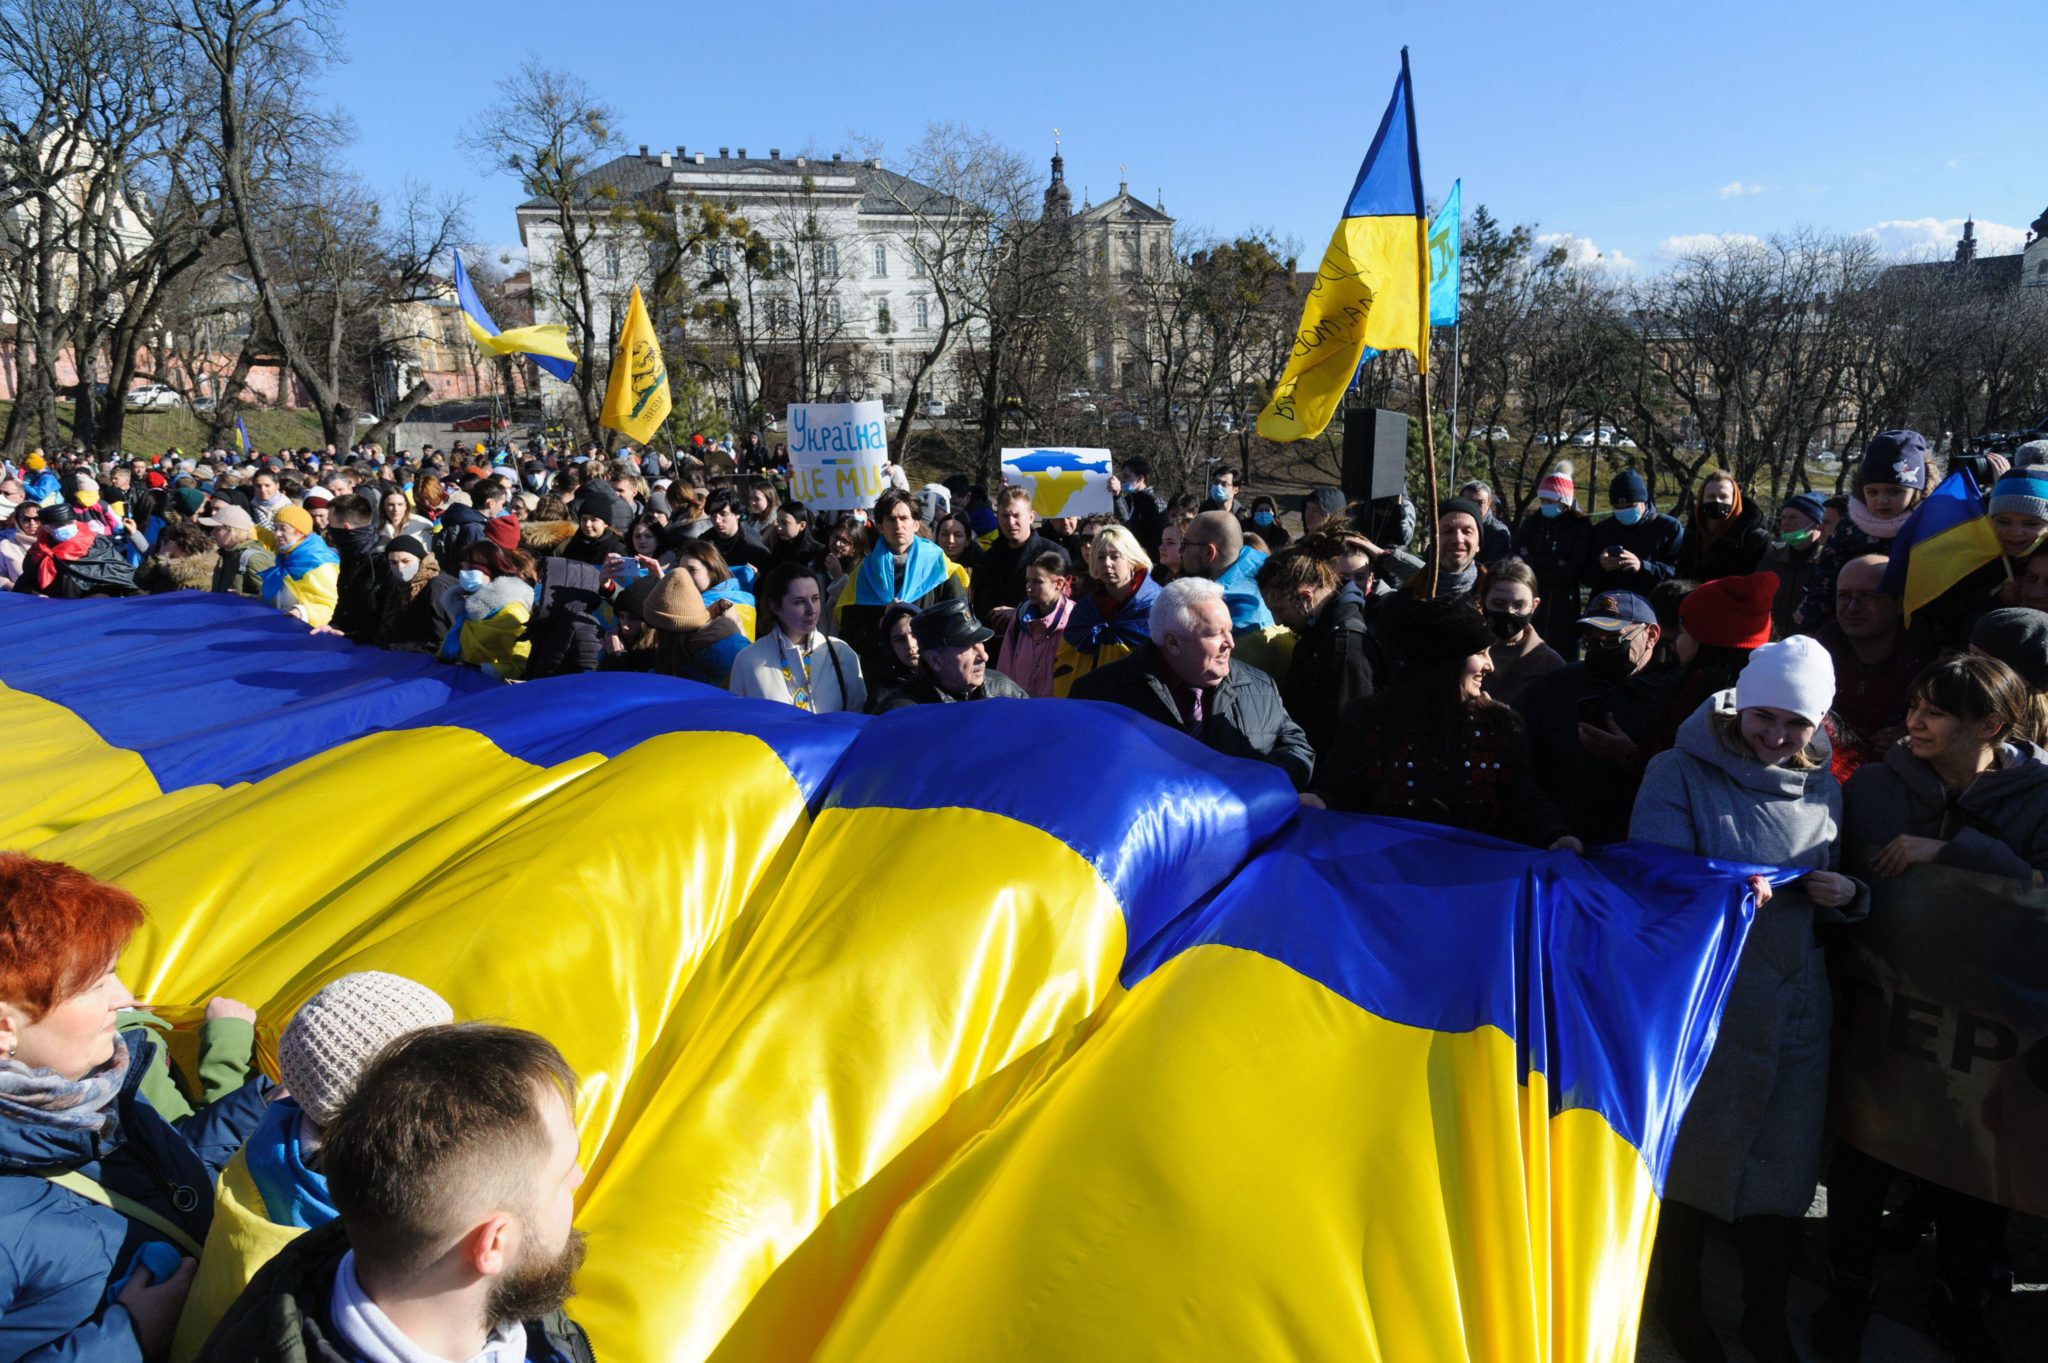 Ukrainians attend the Unity March for Ukraine in downtown Lviv. Image: Mykola Tys / Alamy Stock Photo